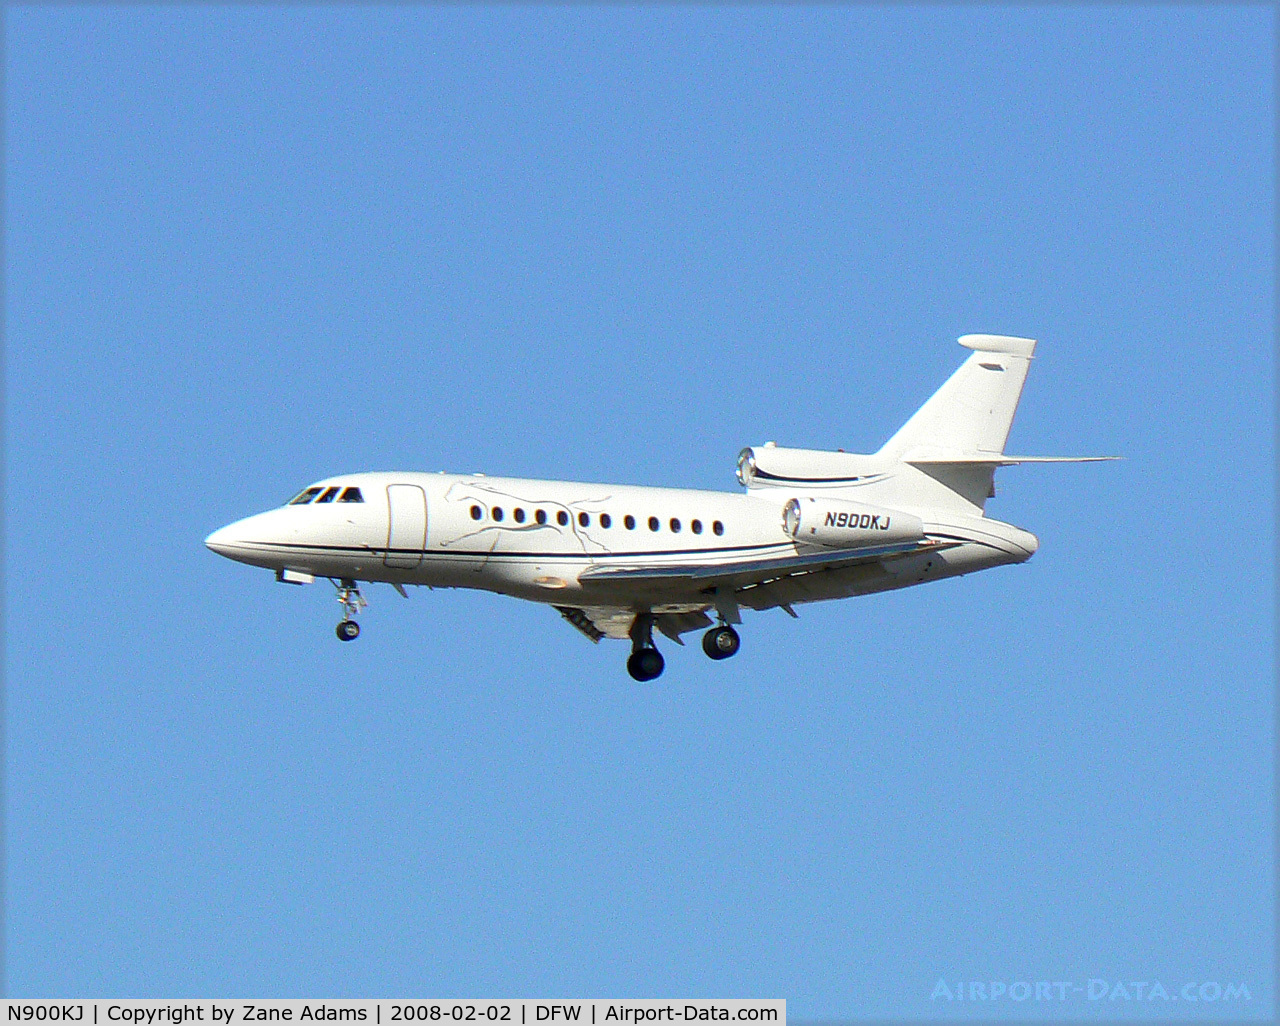 N900KJ, 2002 Dassault Falcon 900 C/N 199, Kendall Jackson Wine - Falcon 900 landing at DFW